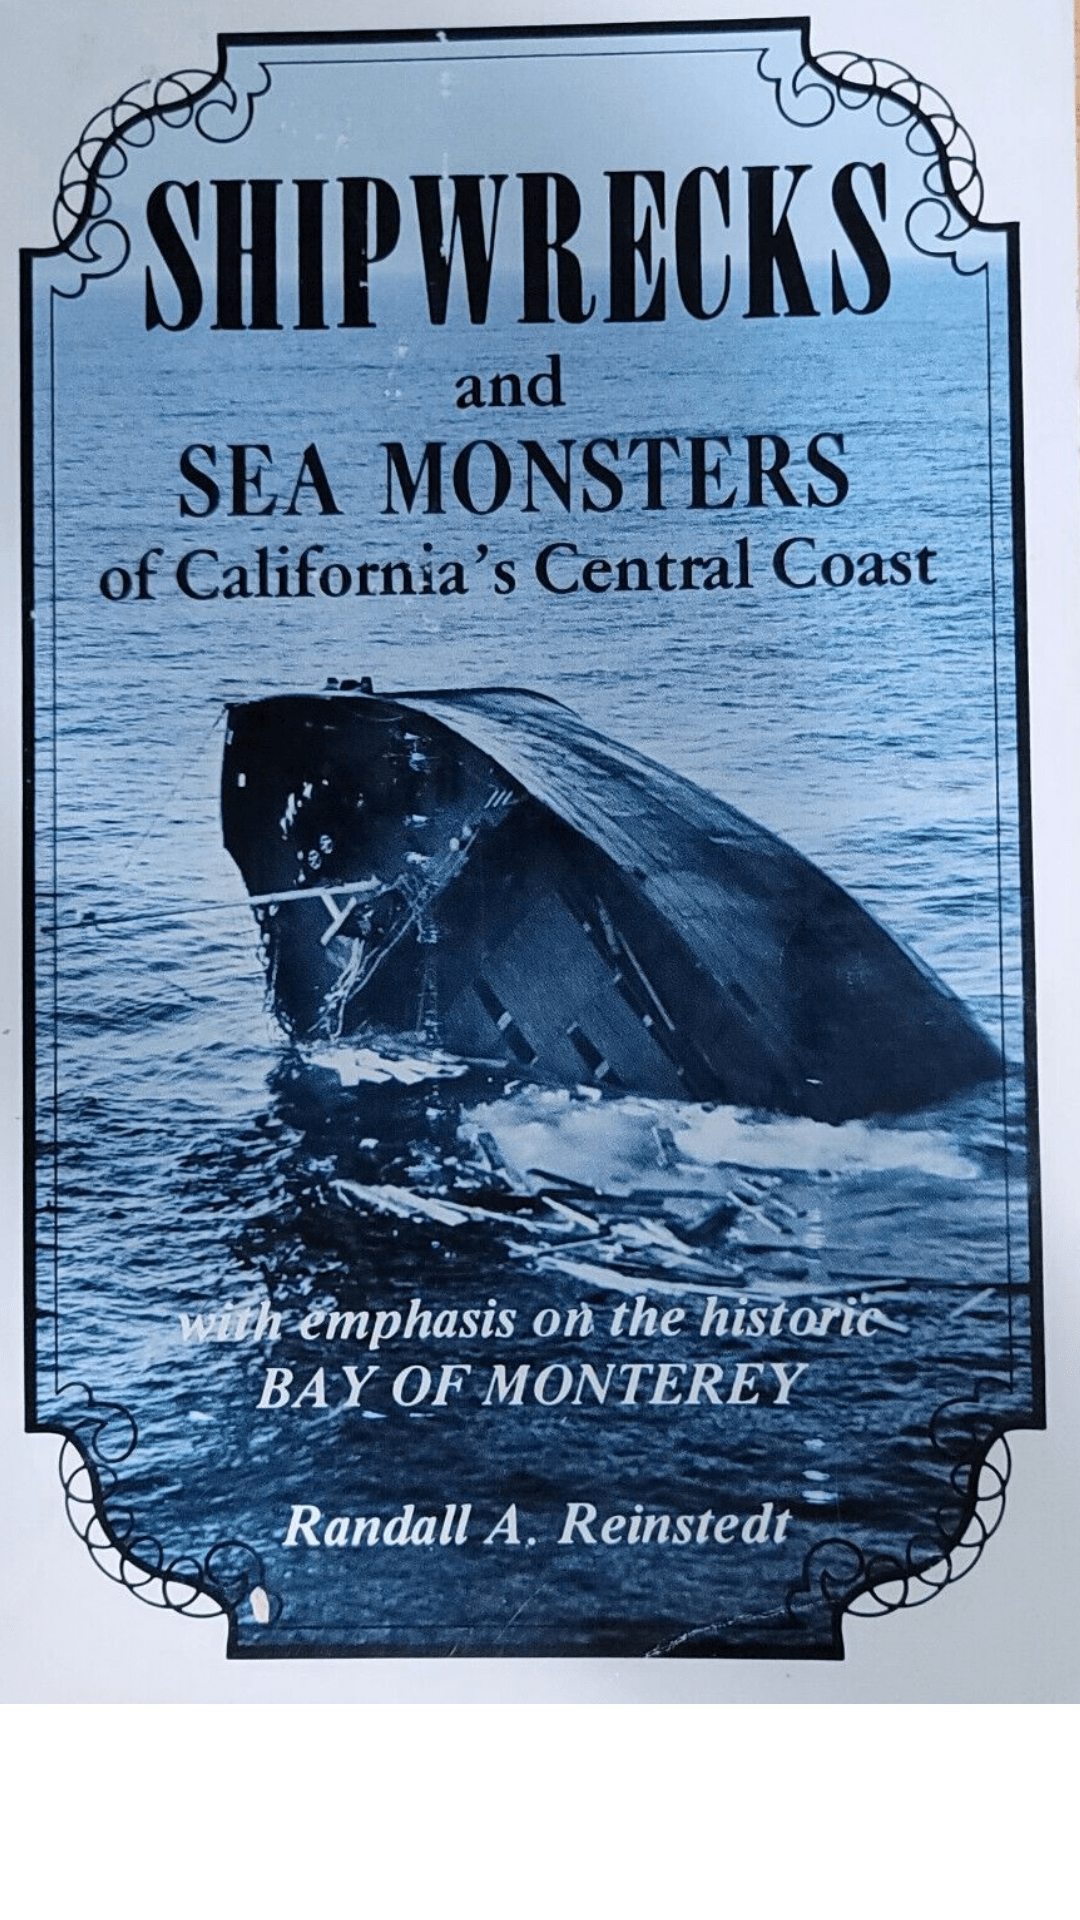 Shipwrecks and Sea Monsters of California's Central Coast